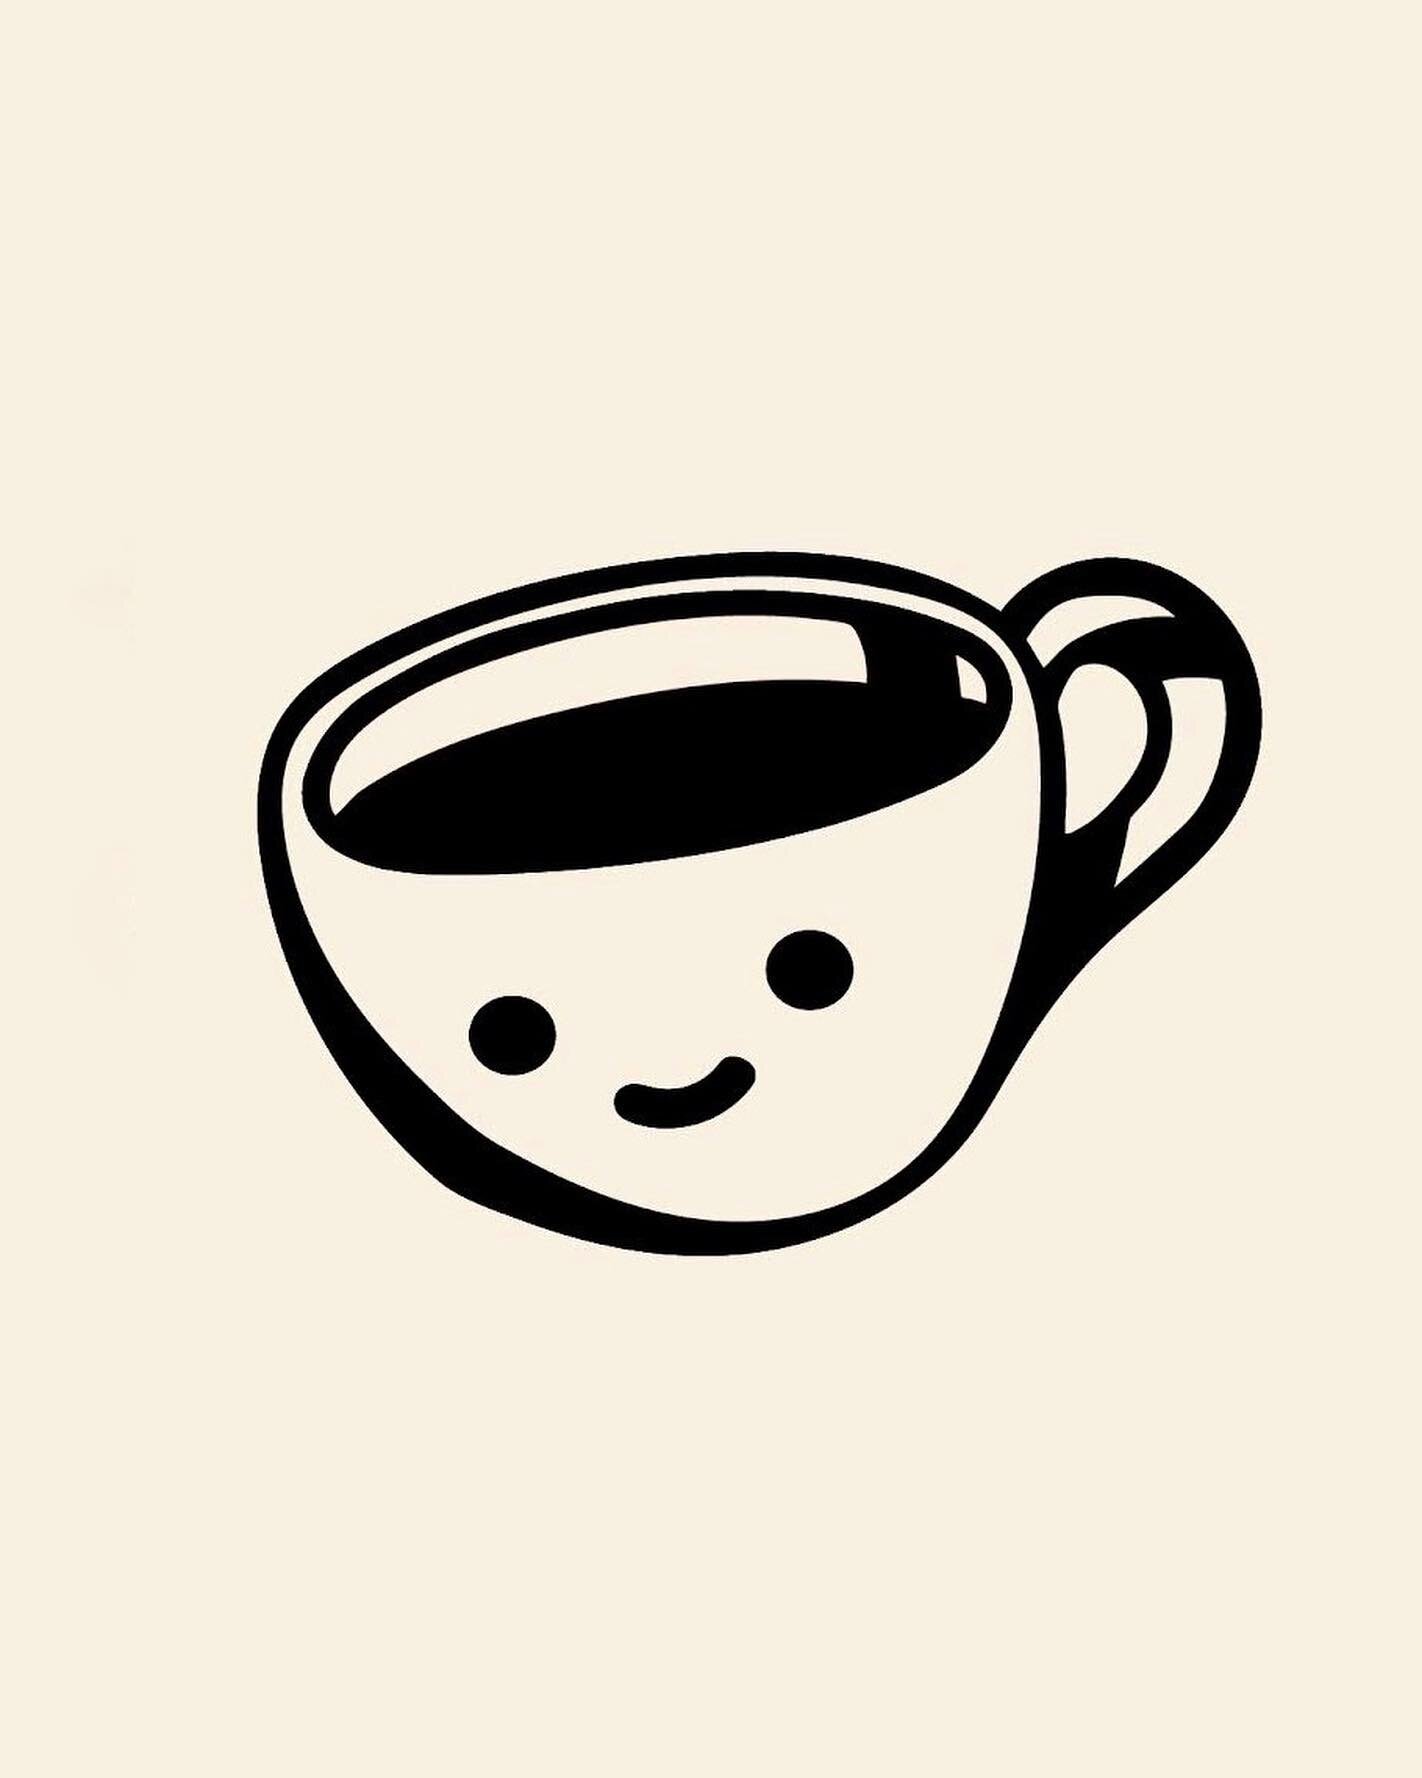 Bei 10 Stempeln bekommst du ein Hei&szlig;getr&auml;nk gratis :) 

#omokaffee #specialtycoffee 
Design @__kinestuff_